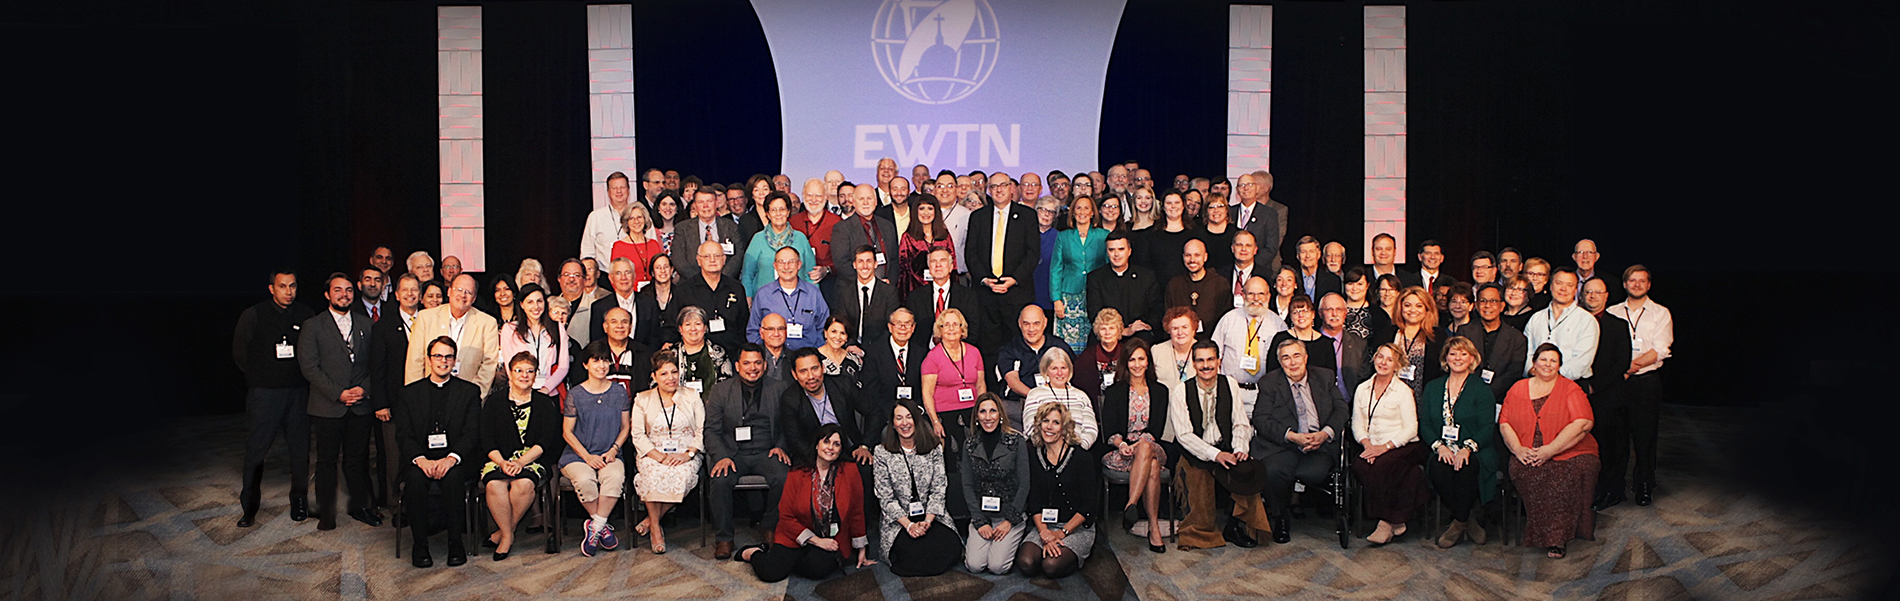 18th Annual EWTN Catholic Radio Conference